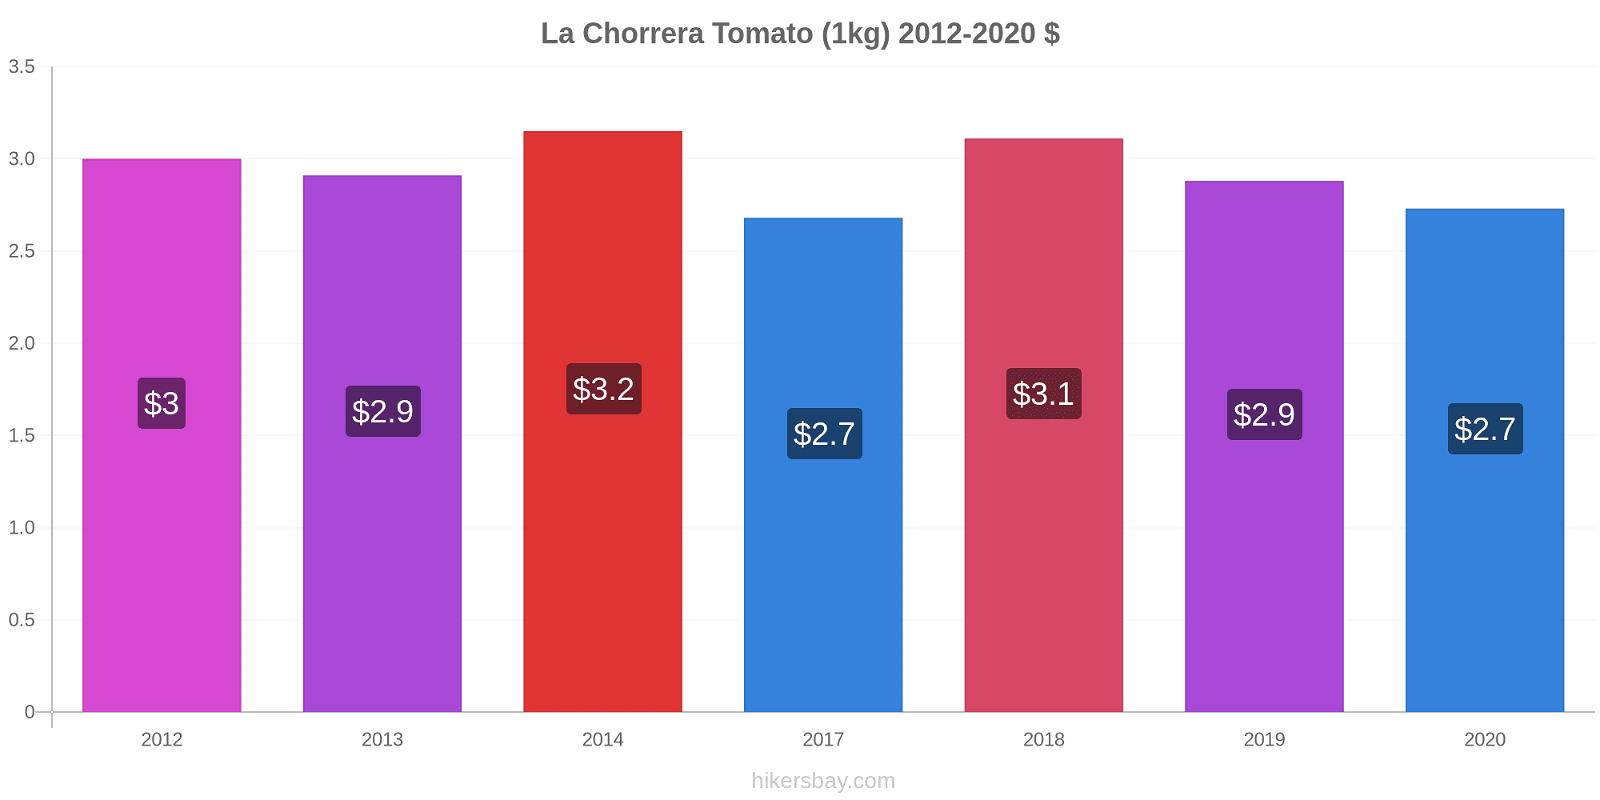 La Chorrera price changes Tomato (1kg) hikersbay.com